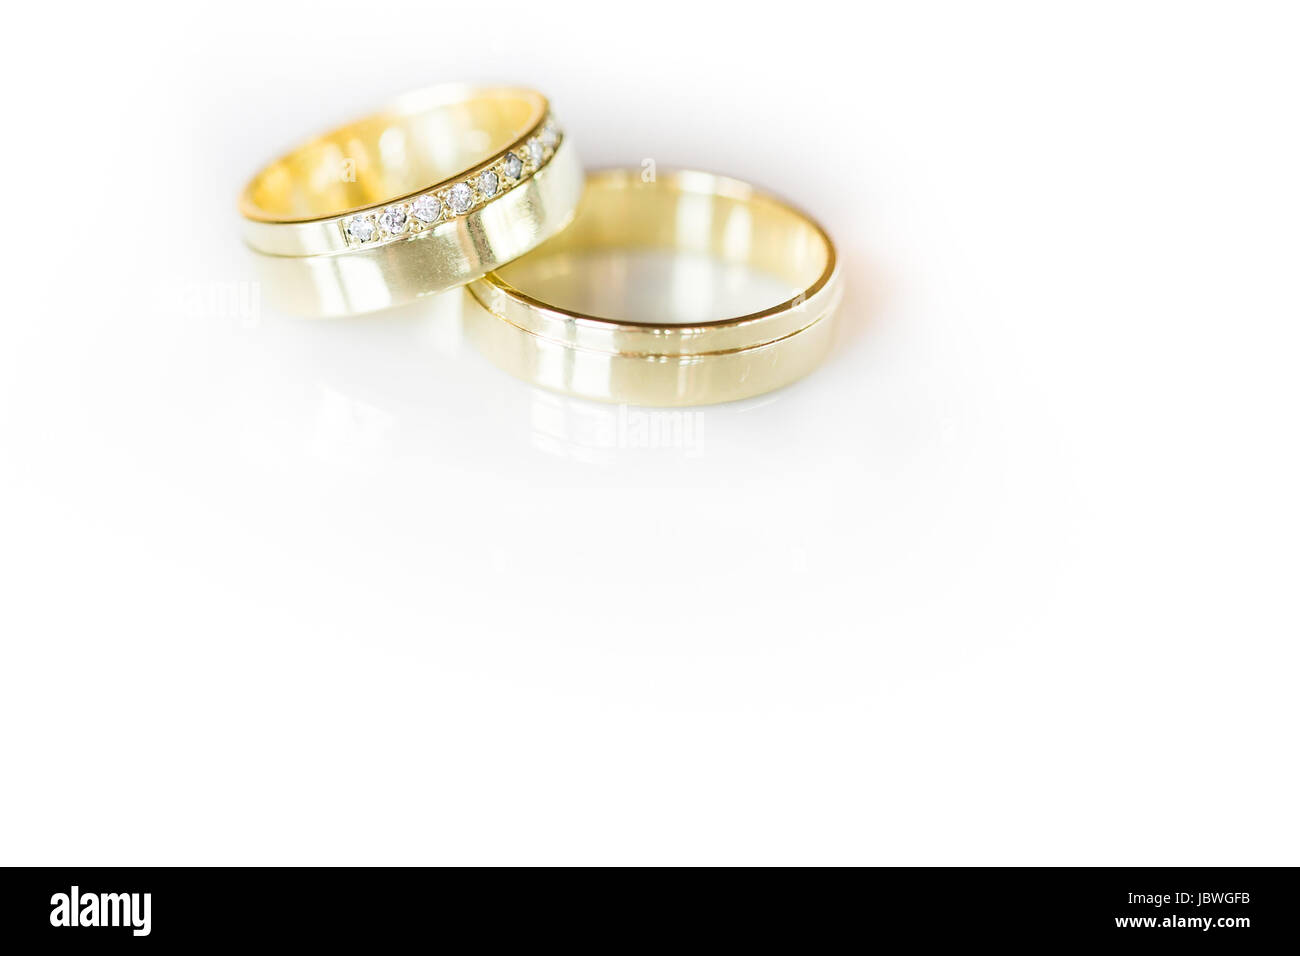 Detalles de anillos de boda Imágenes recortadas de stock - Alamy